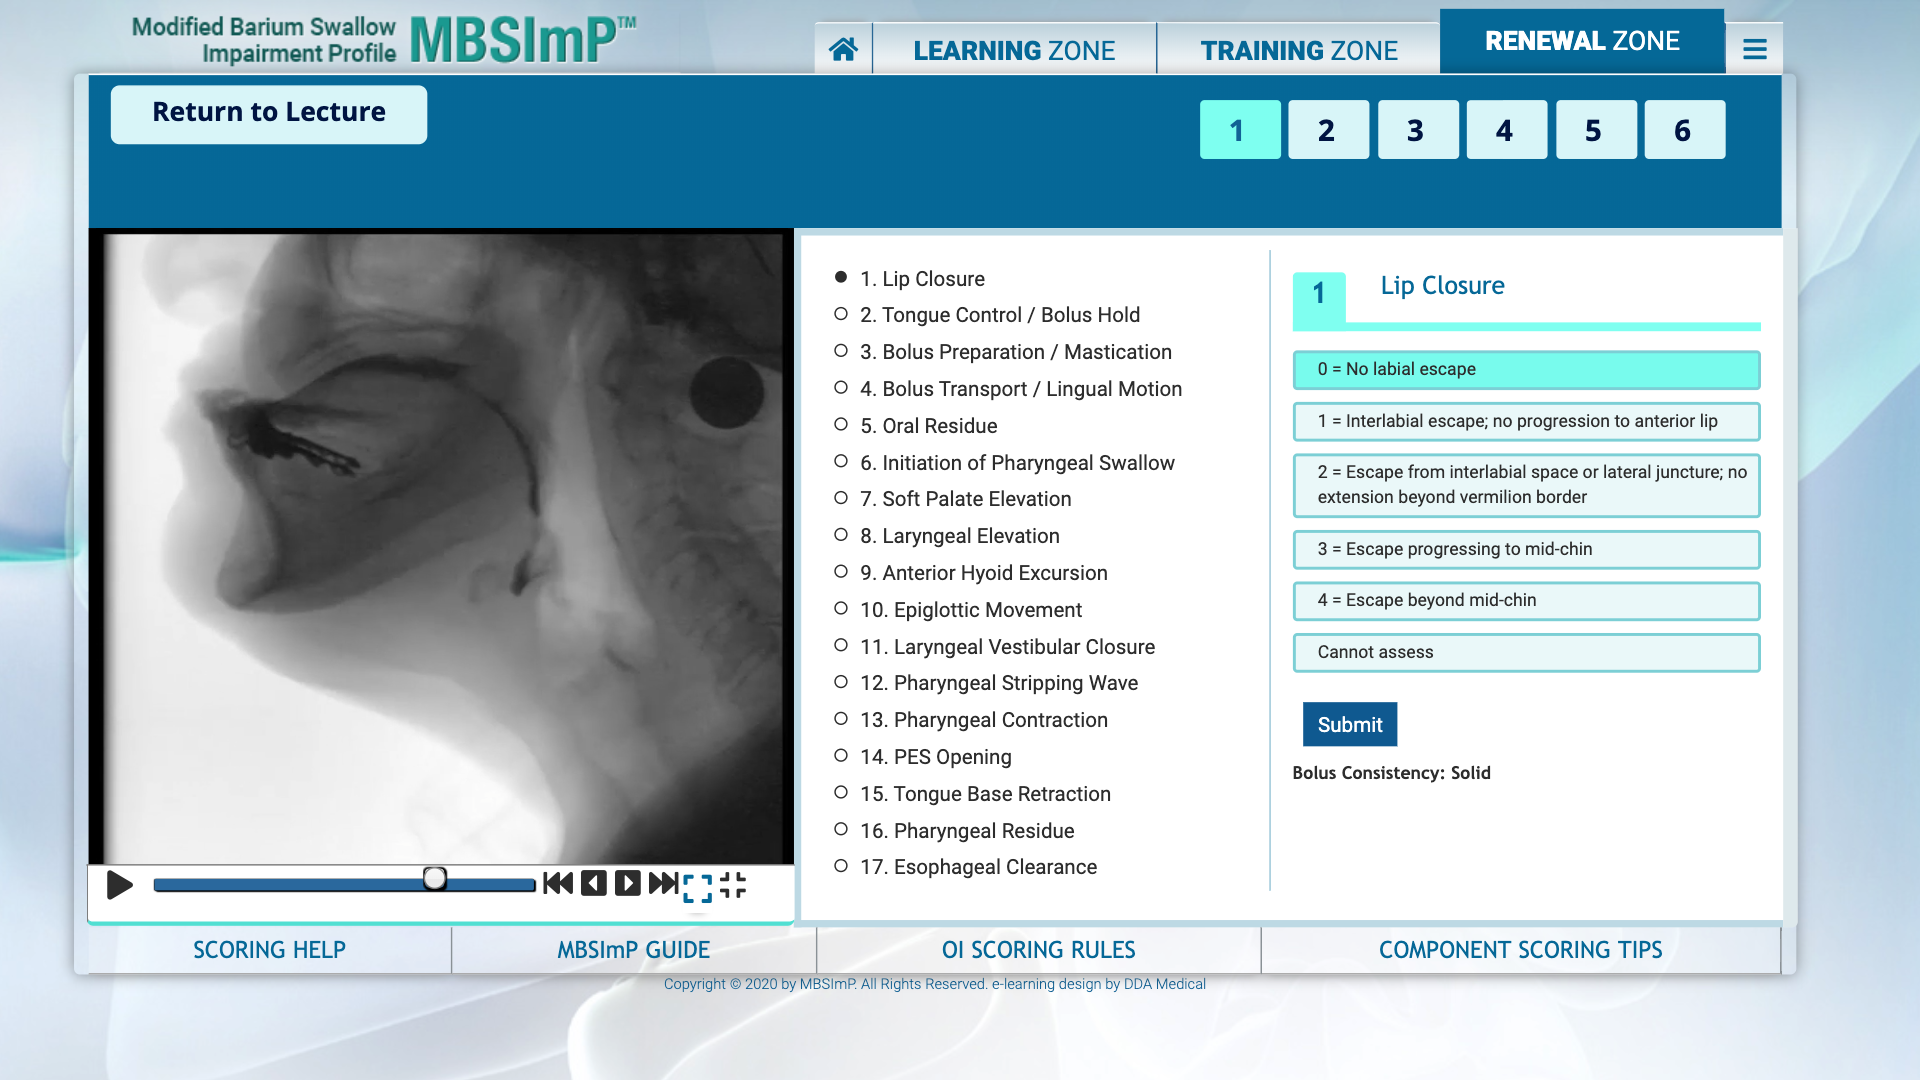 MBSImP Renewal - Dysphagia Assessment 